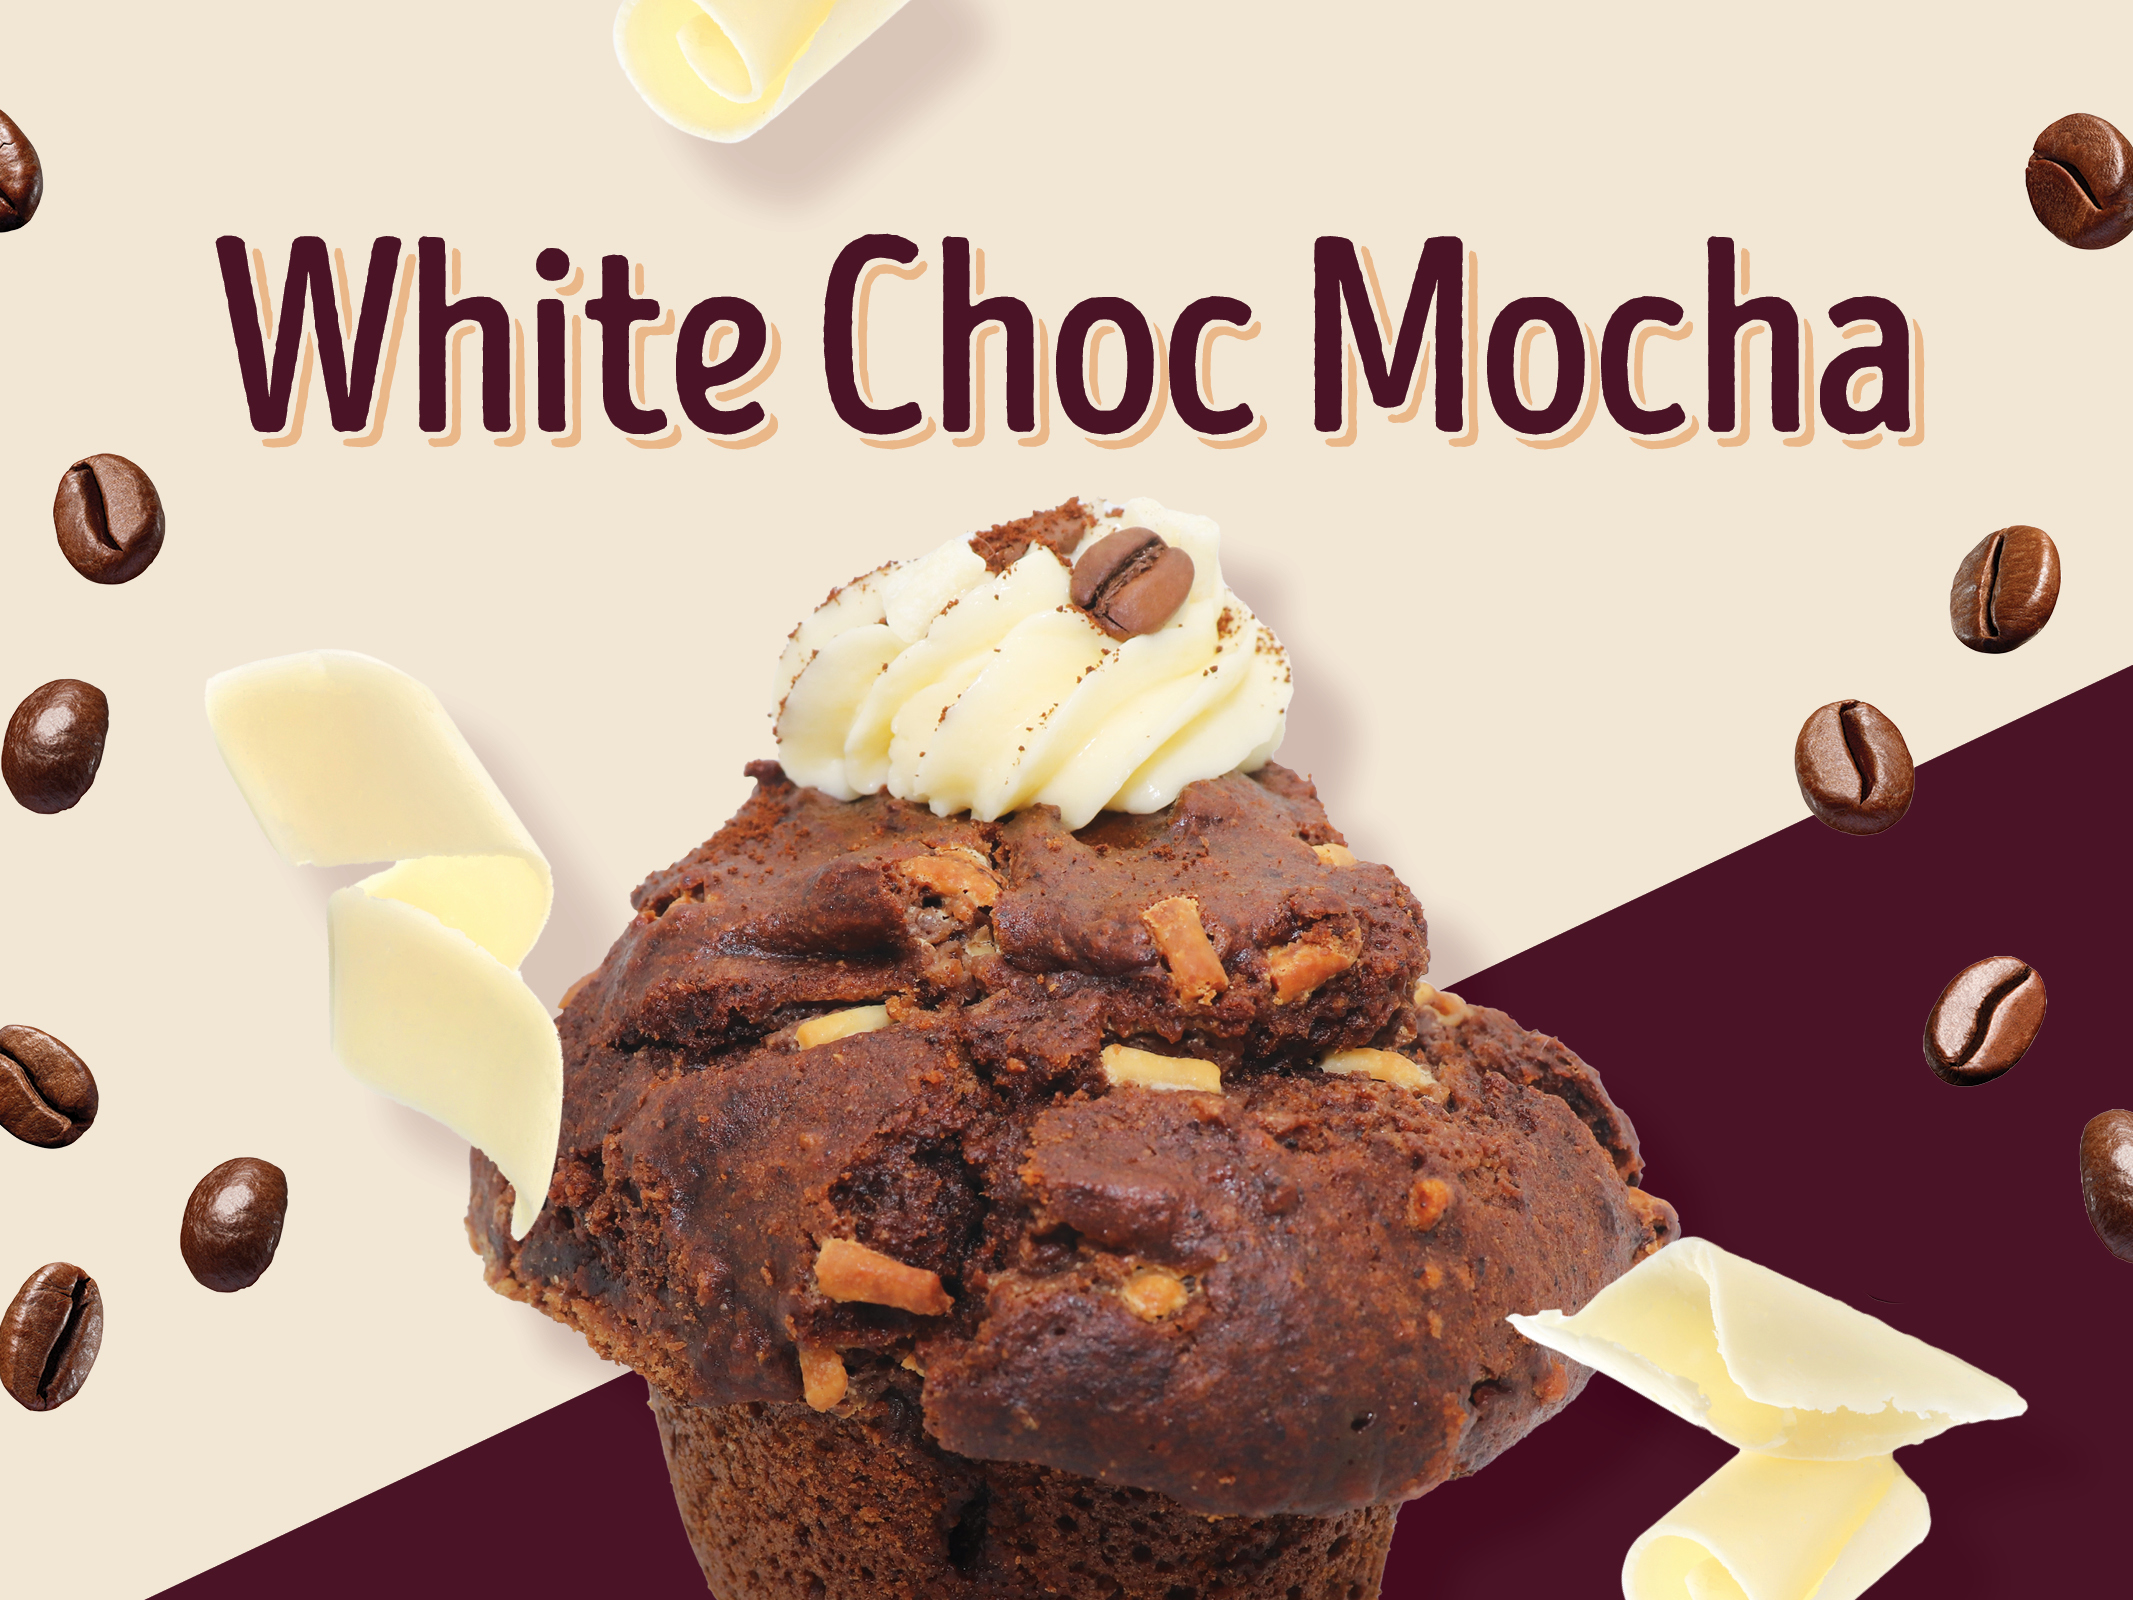 The White Chocolate Muffin...